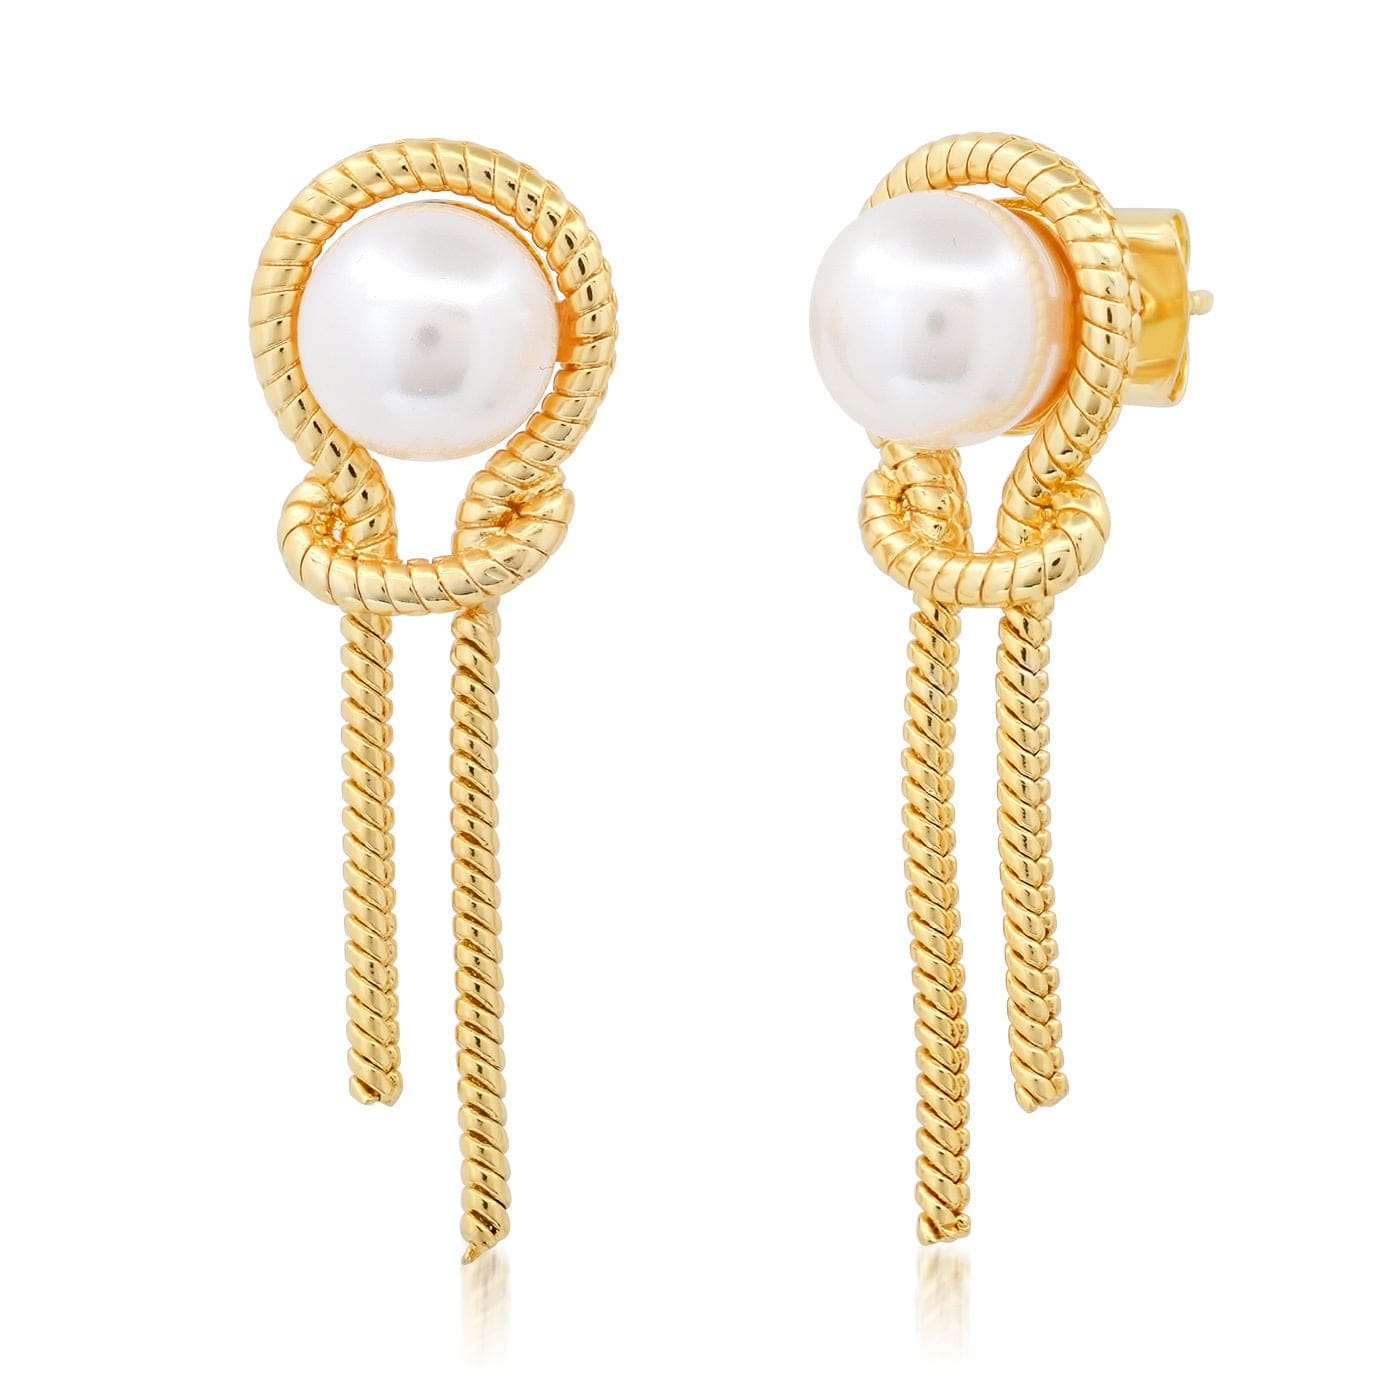 TAI JEWELRY Earrings Knotted Chain Pearl Earrings